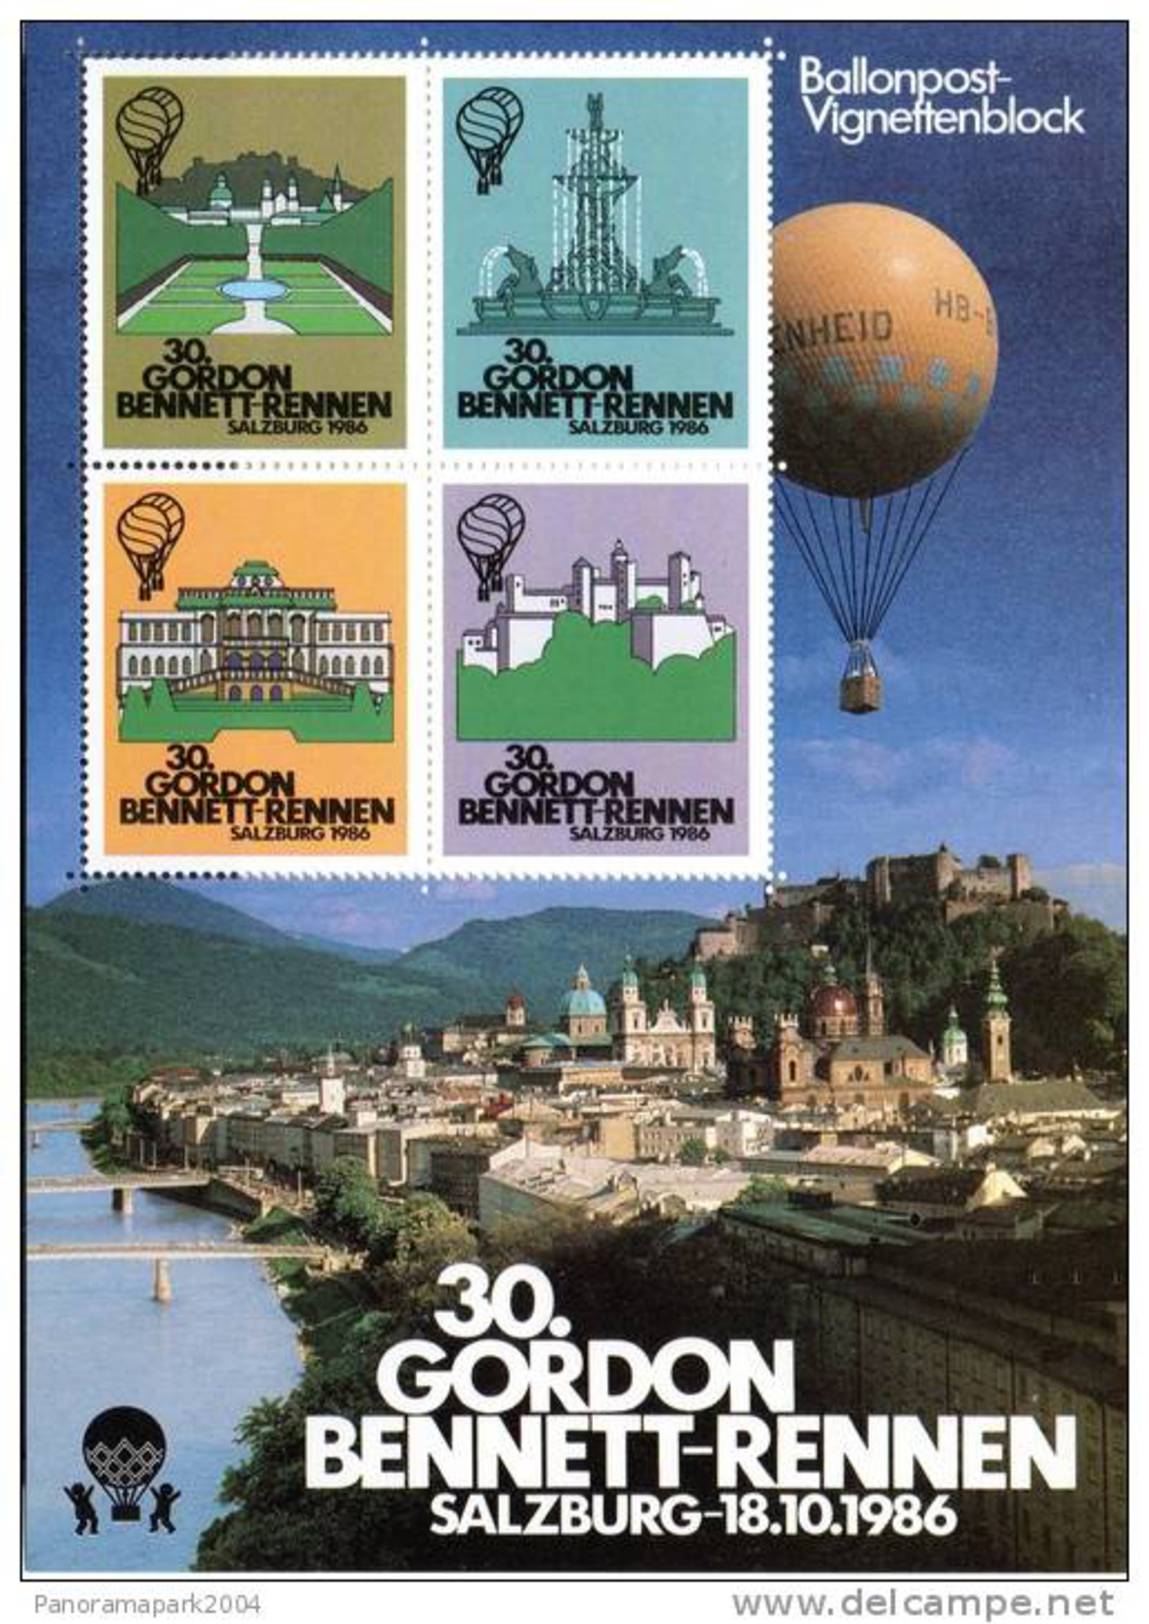 30. Gordon Bennett Rennen Salzburg 18.10.1986 Österreich Vignettenblock Ballonpost Heißluftballon - Ballonpost